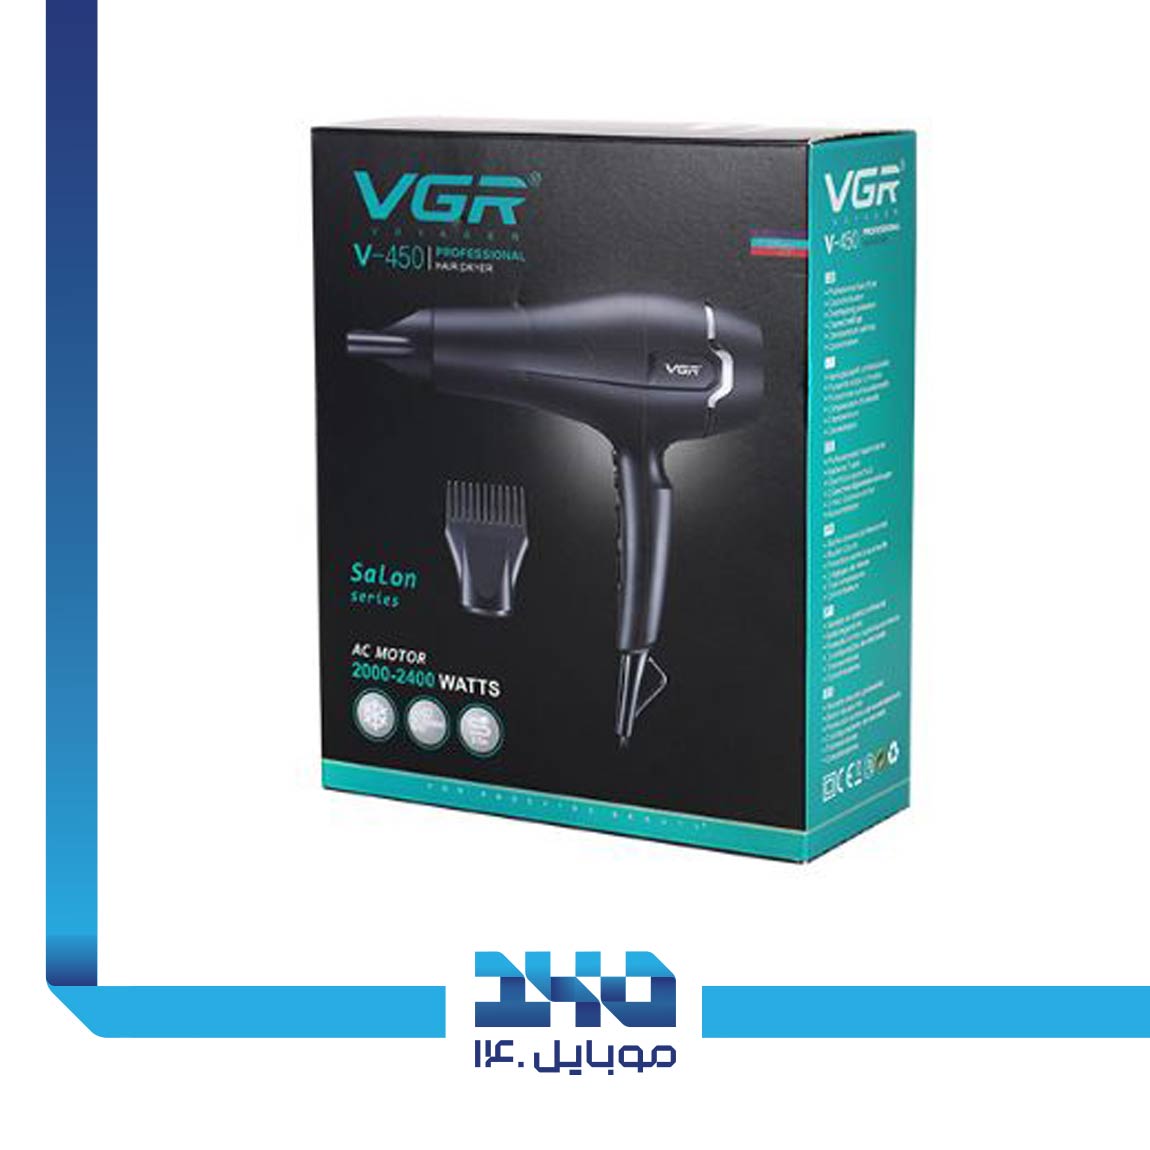 VGR V-450 HairDryer 3